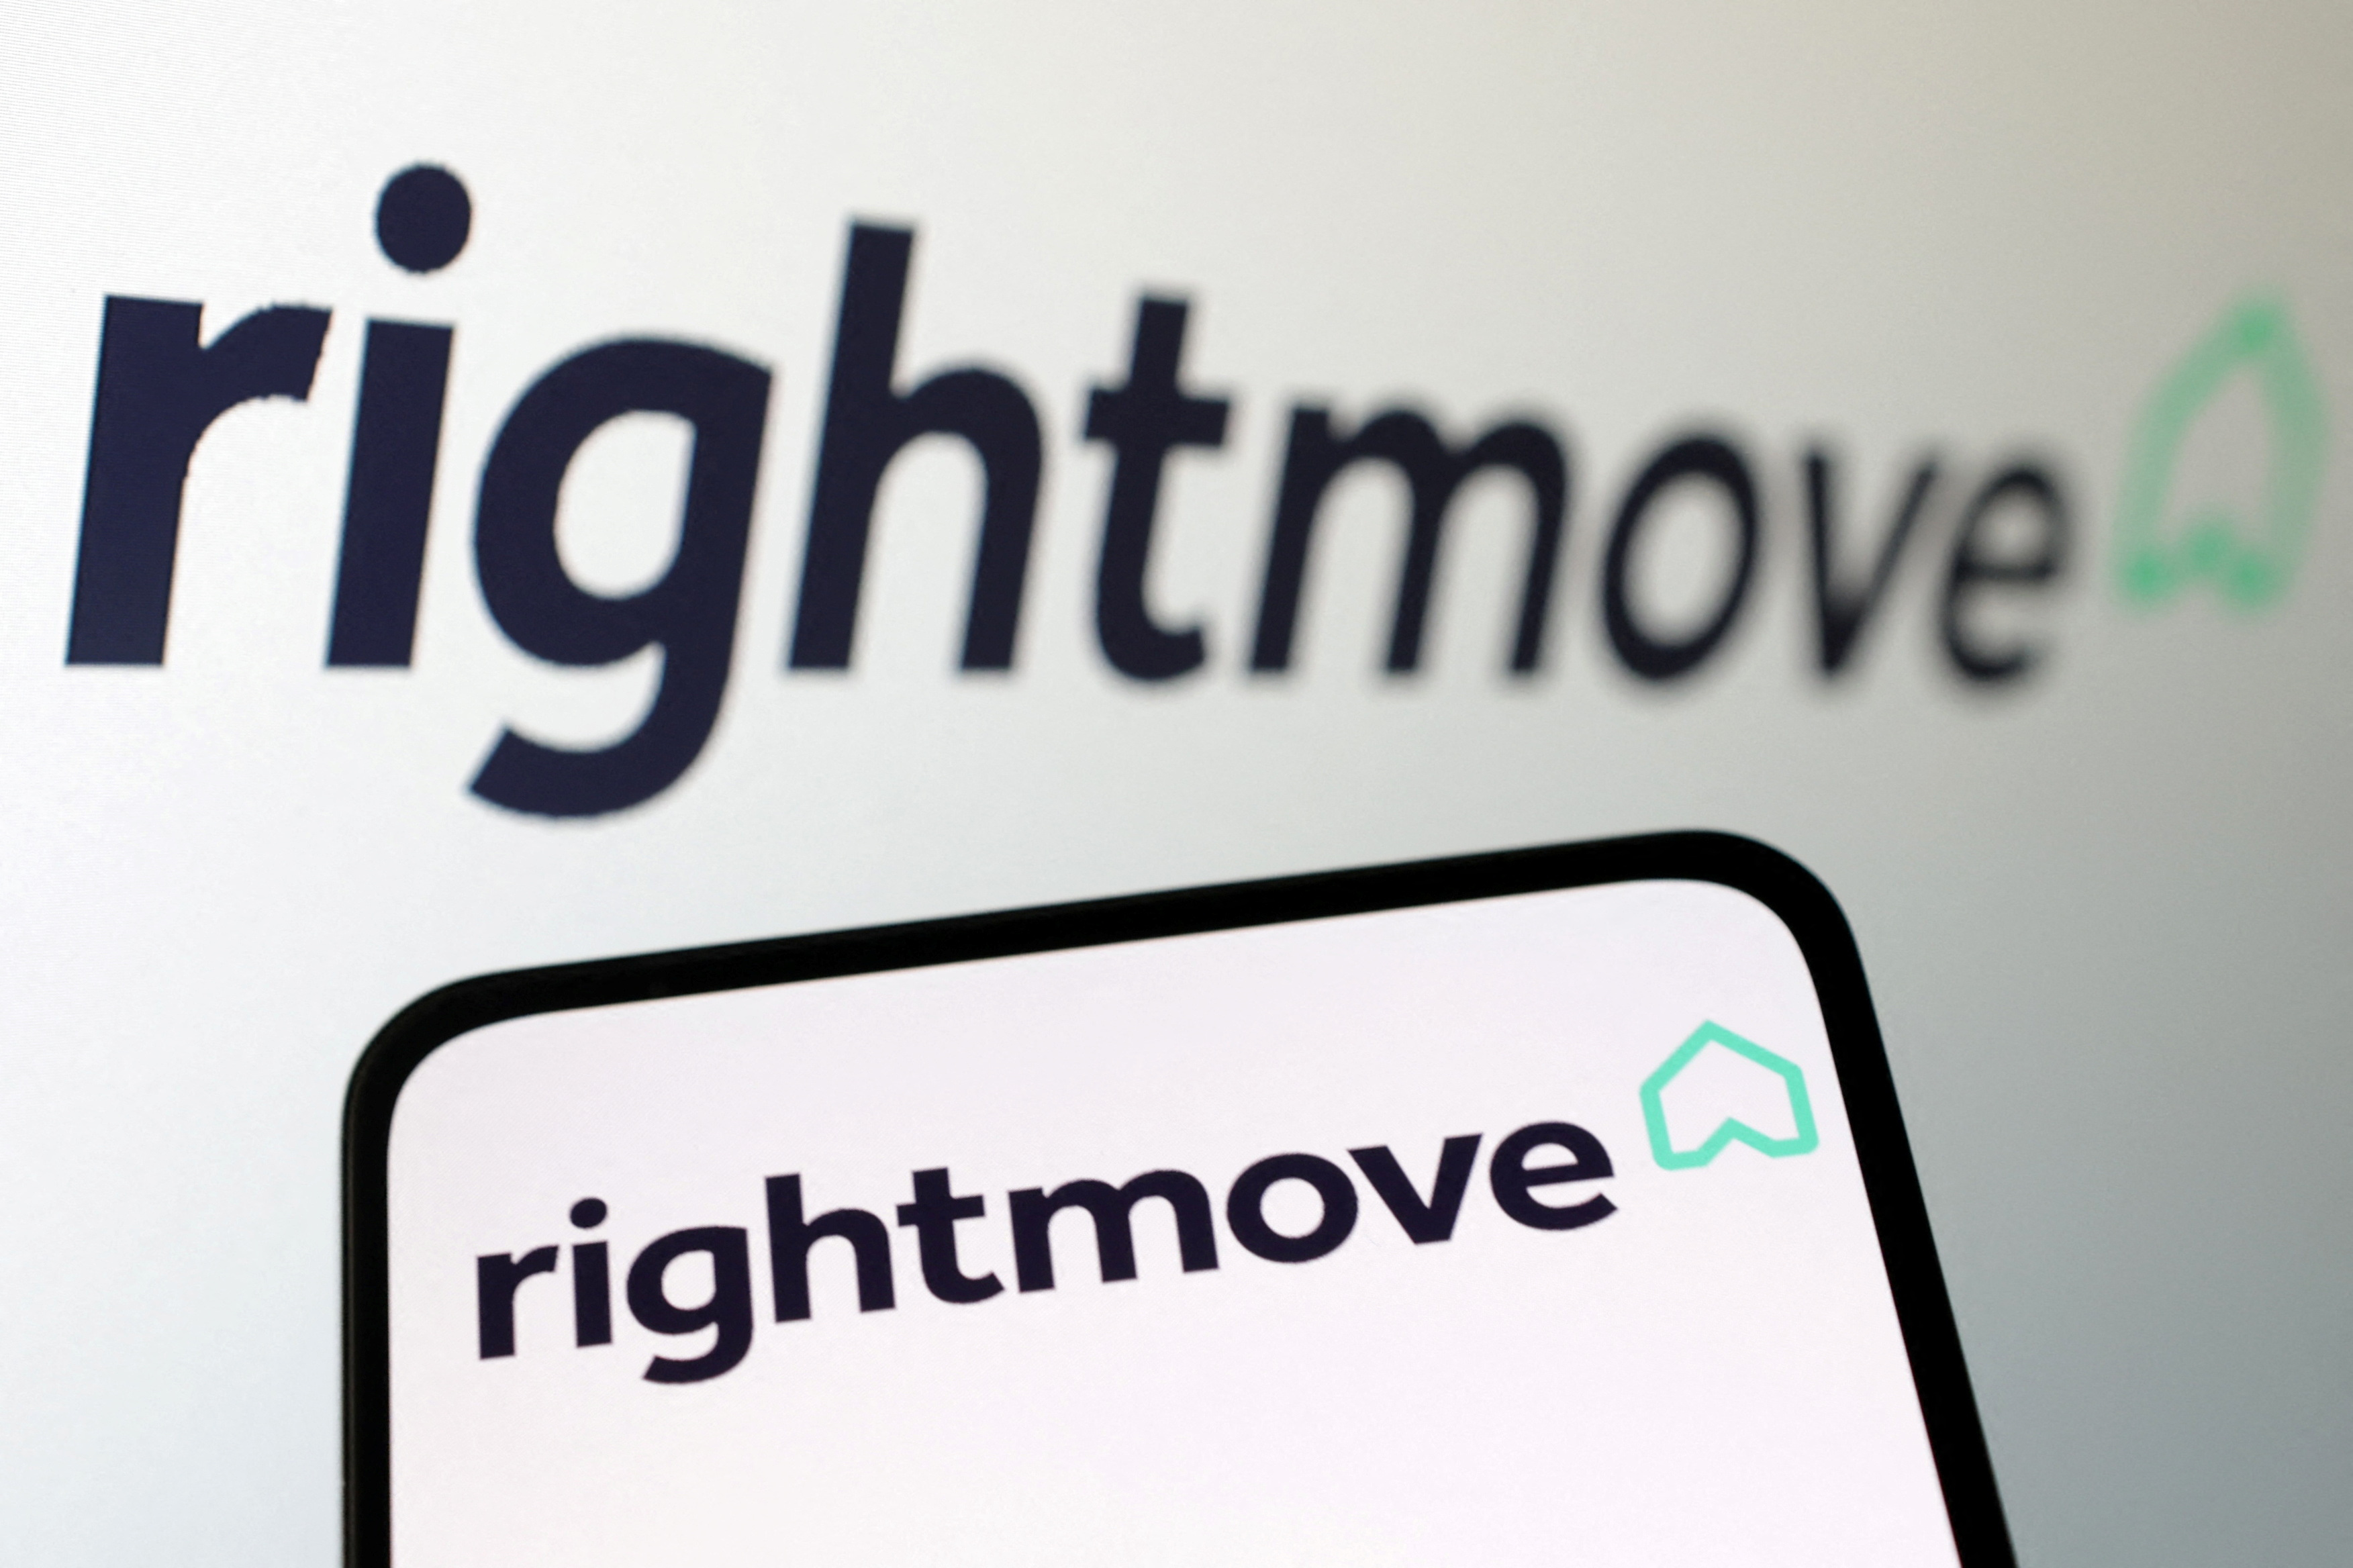 Illustration shows Rightmove logo